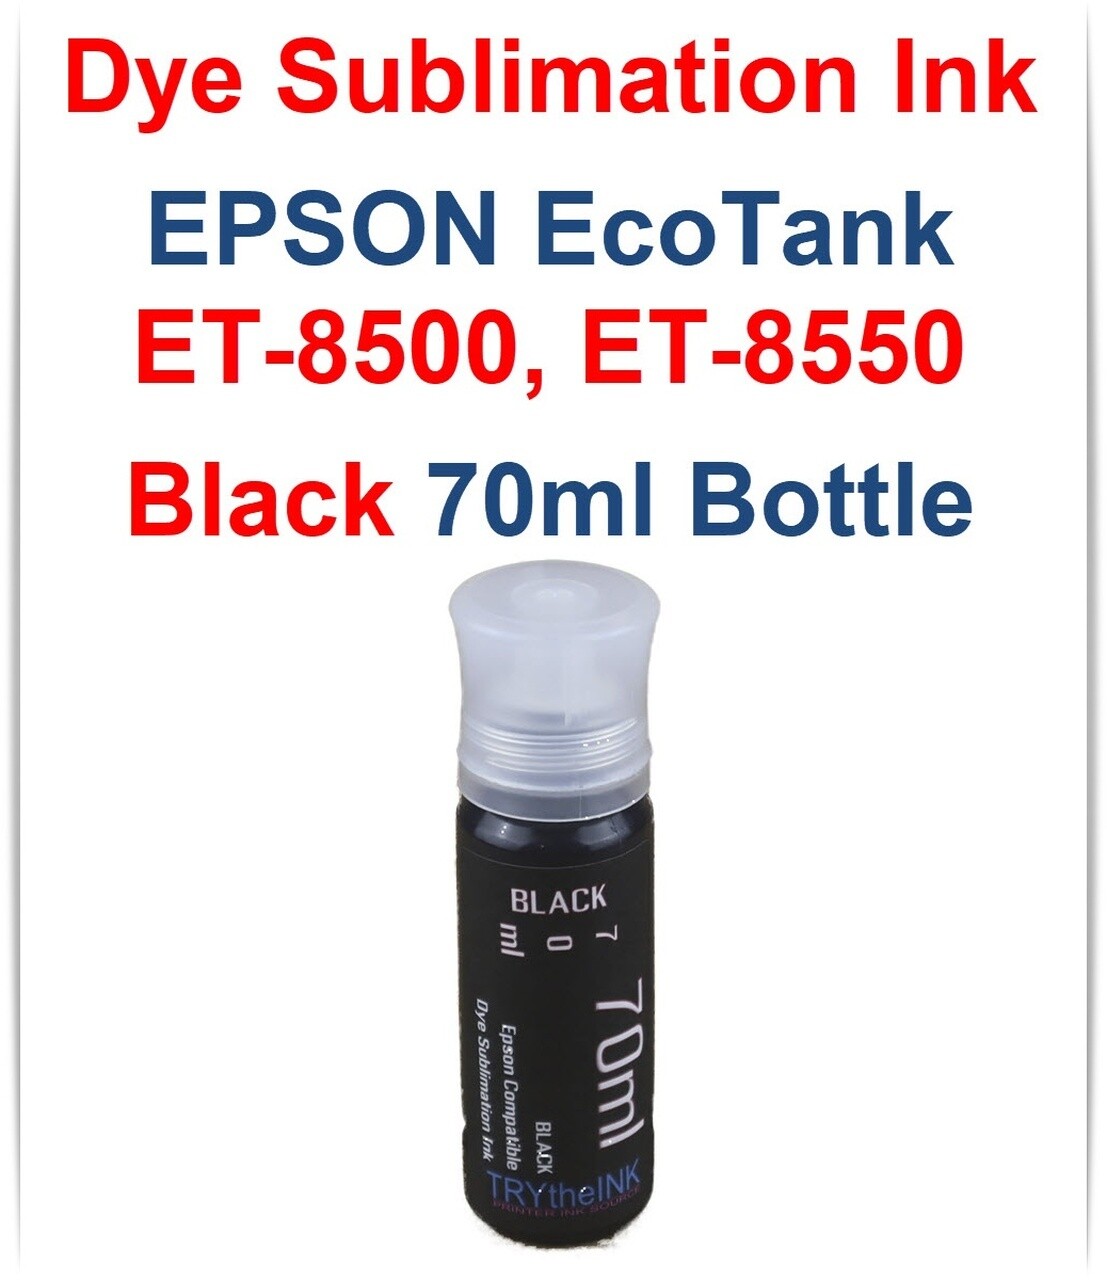 Black Dye Sublimation Ink 70ml bottle for EPSON EcoTank ET-8500 ET-8550 printers